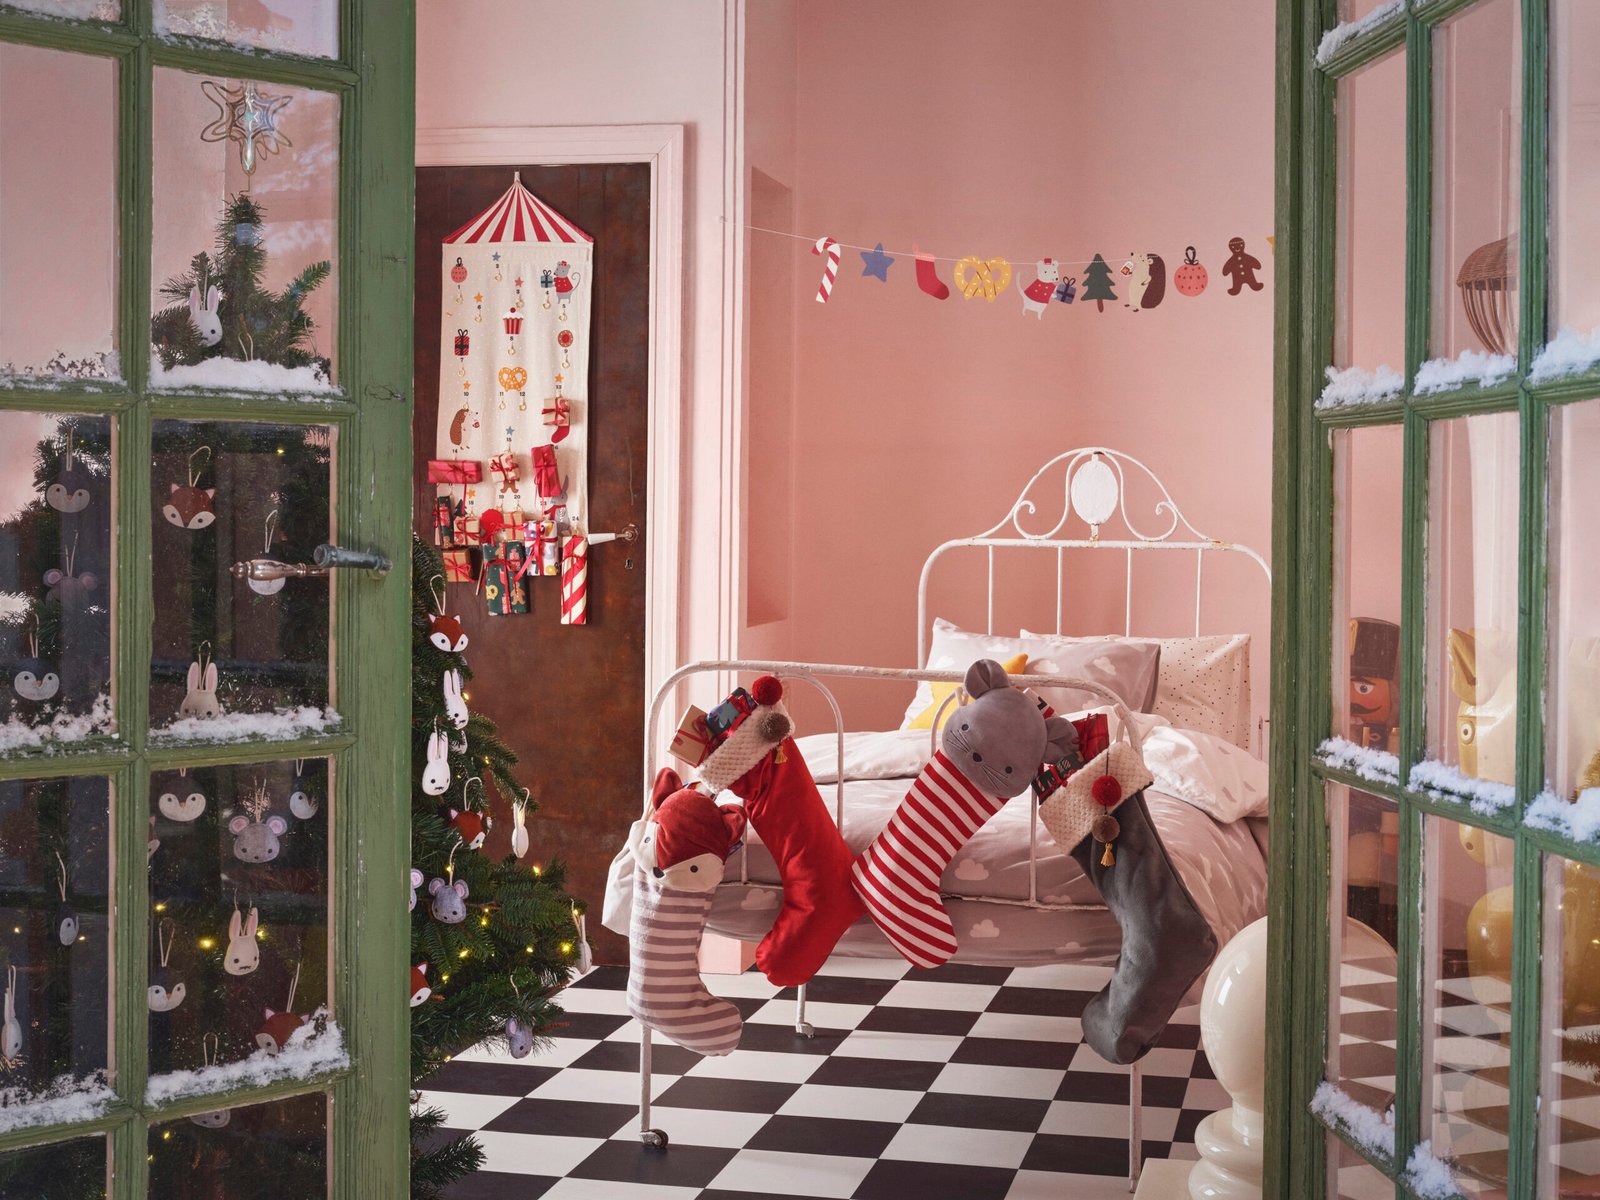 H&M HOME PRESENTS A BRIGHT HOLIDAY SEASON – LET’S PLAY MAGIC